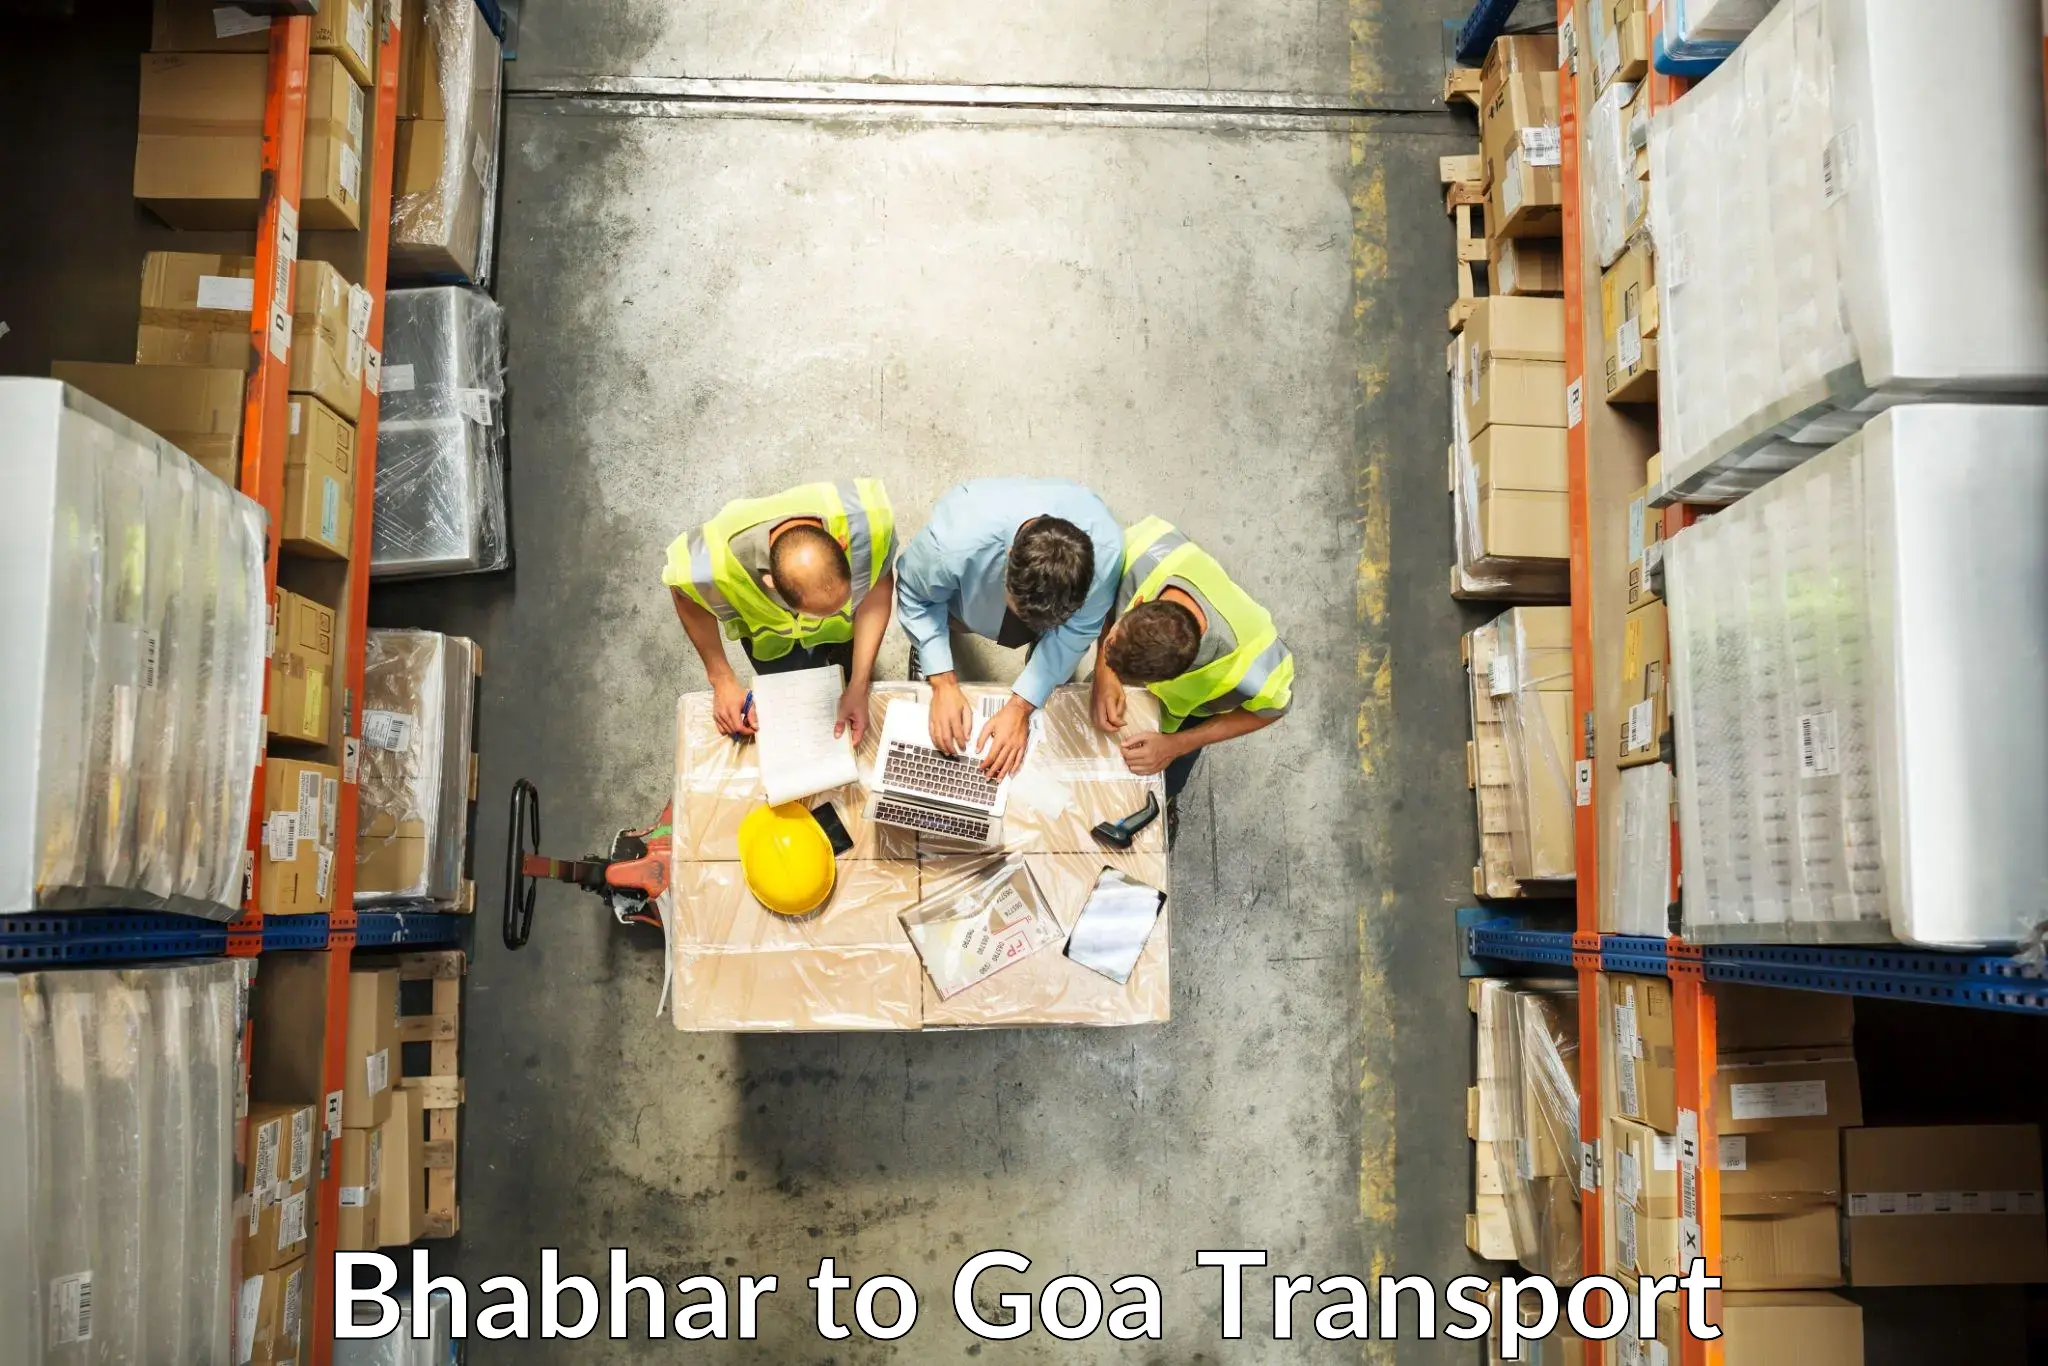 Sending bike to another city Bhabhar to IIT Goa